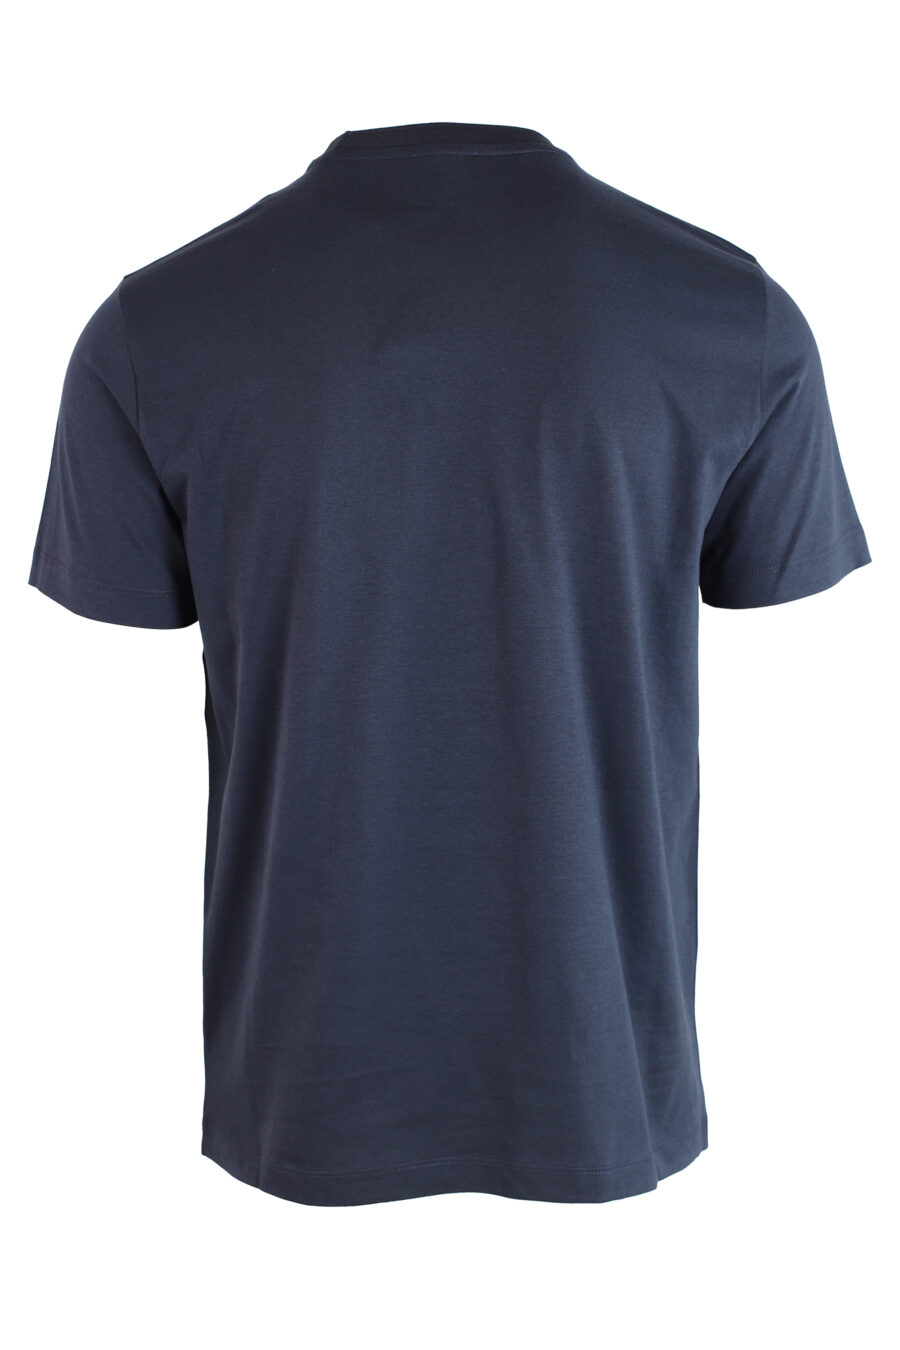 Dunkelblaues T-Shirt mit Mini-Logo in goldenem Aufnäher - IMG 3224